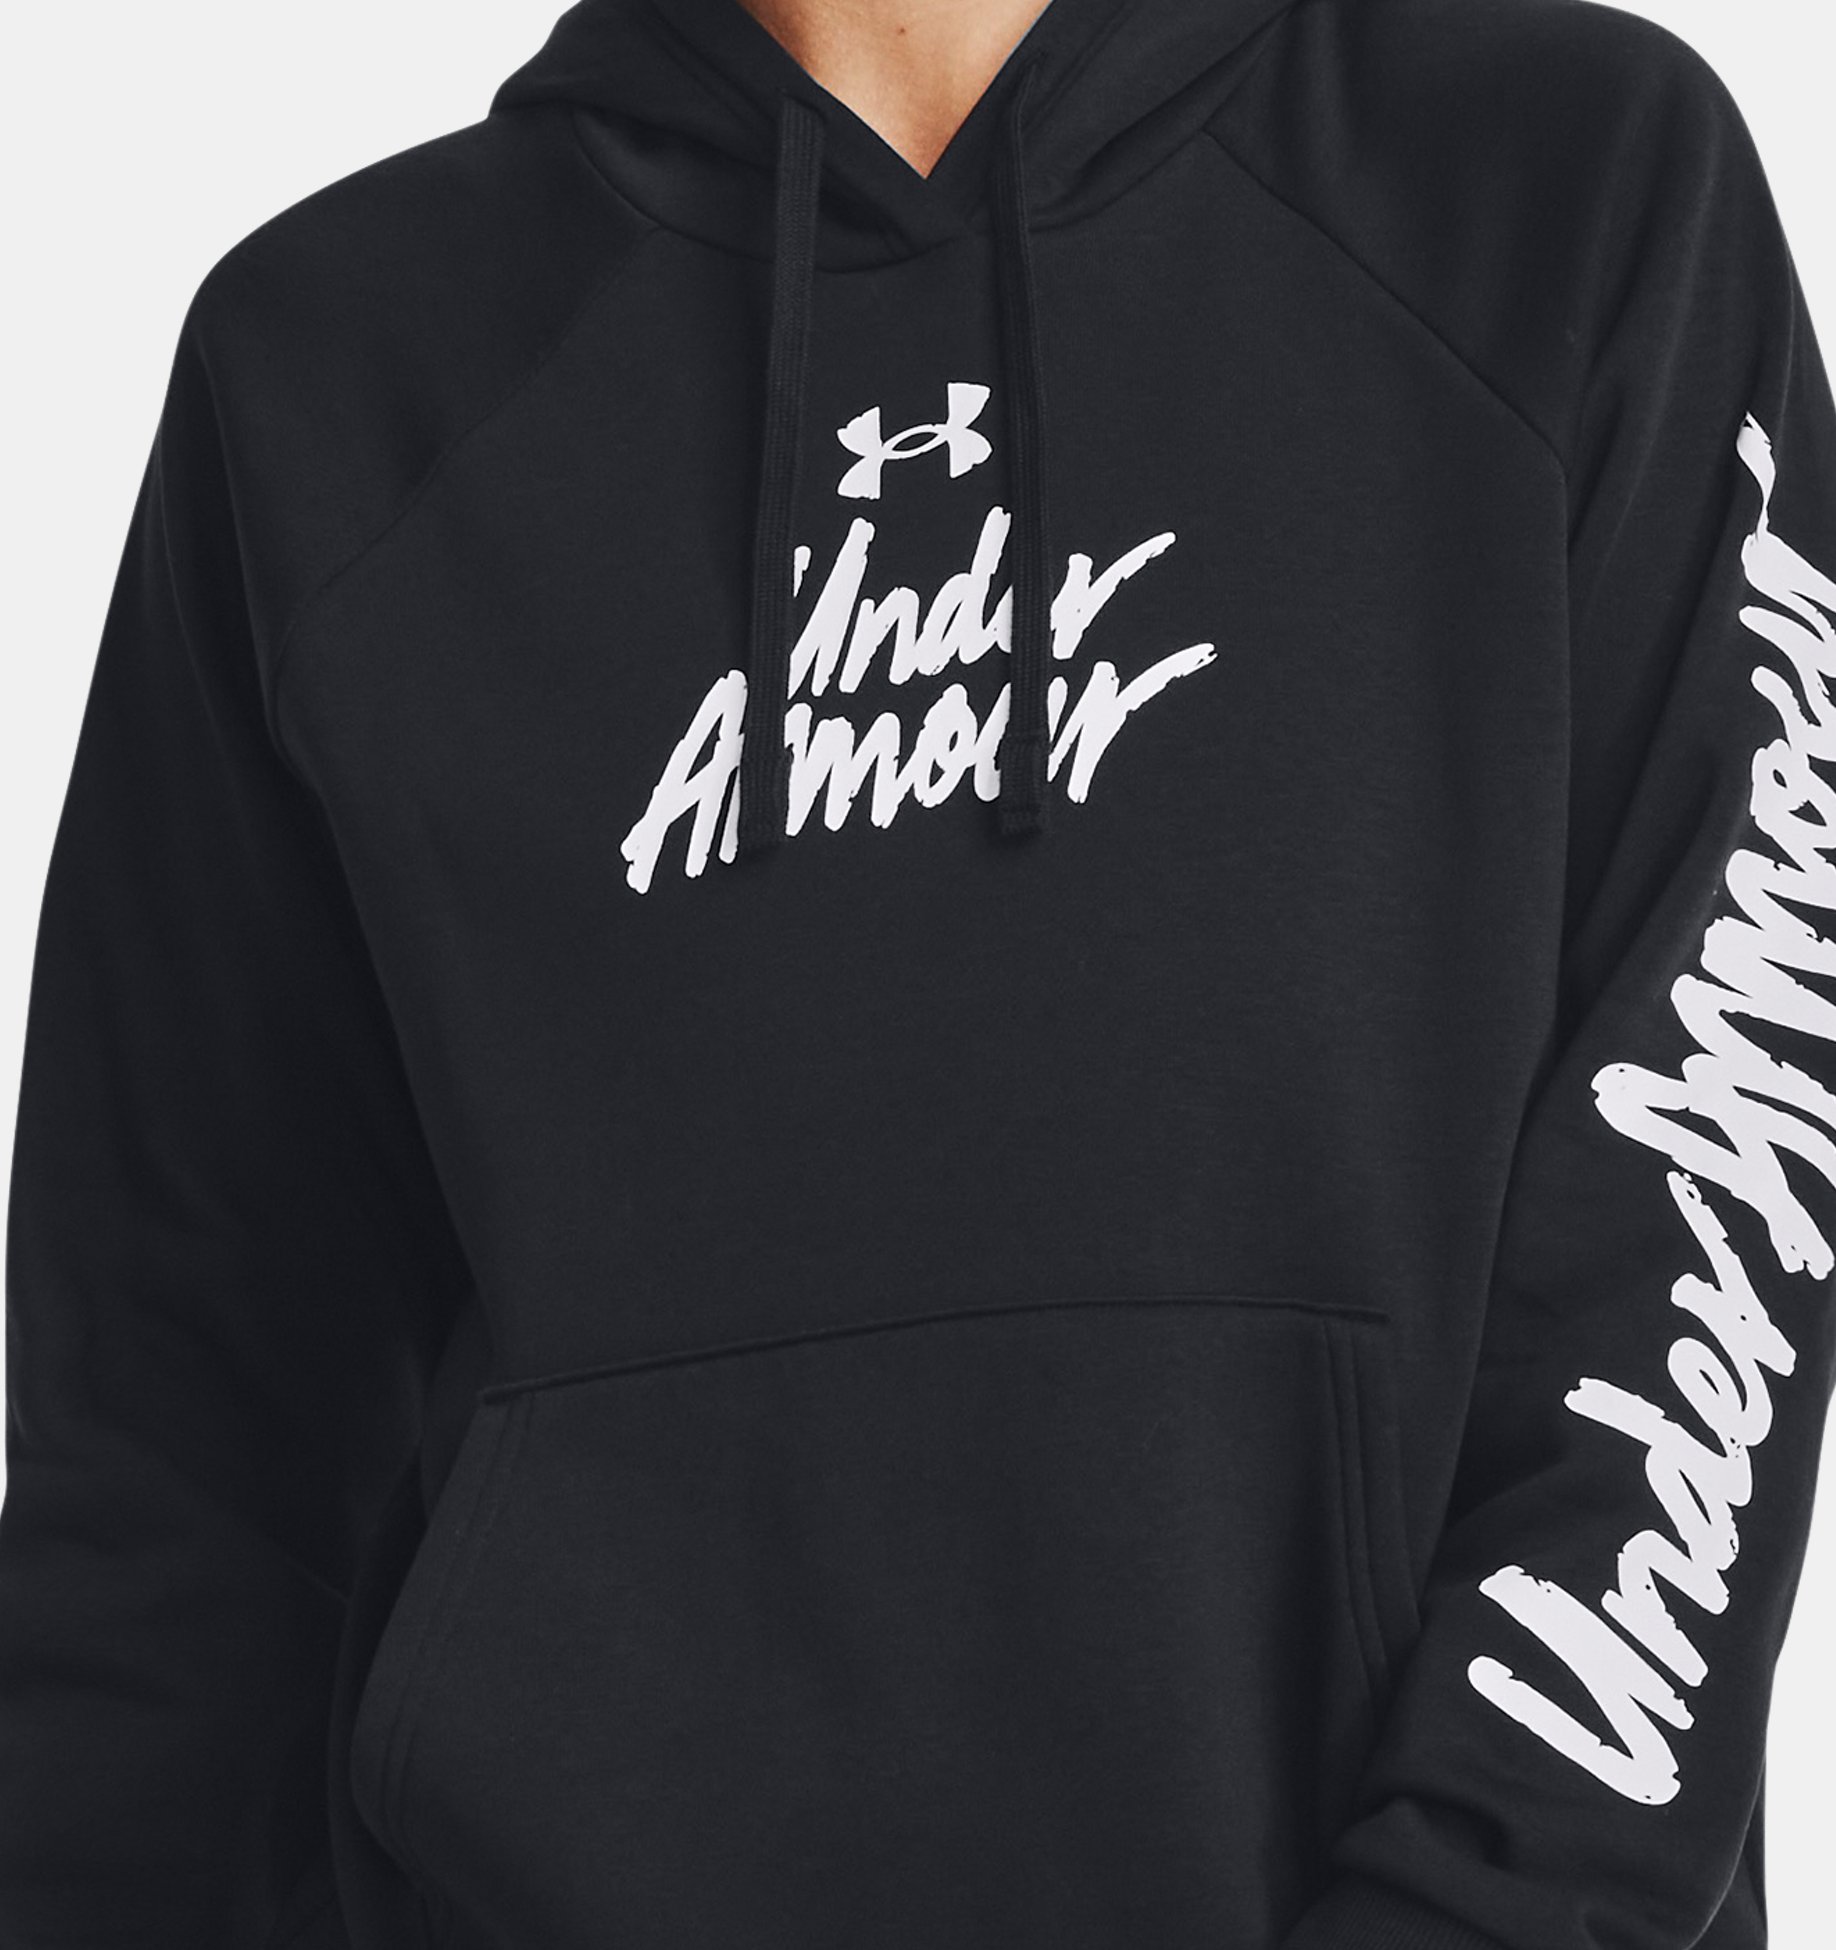 Buy Under Armour Rival Logo Hoody Women Black, White online